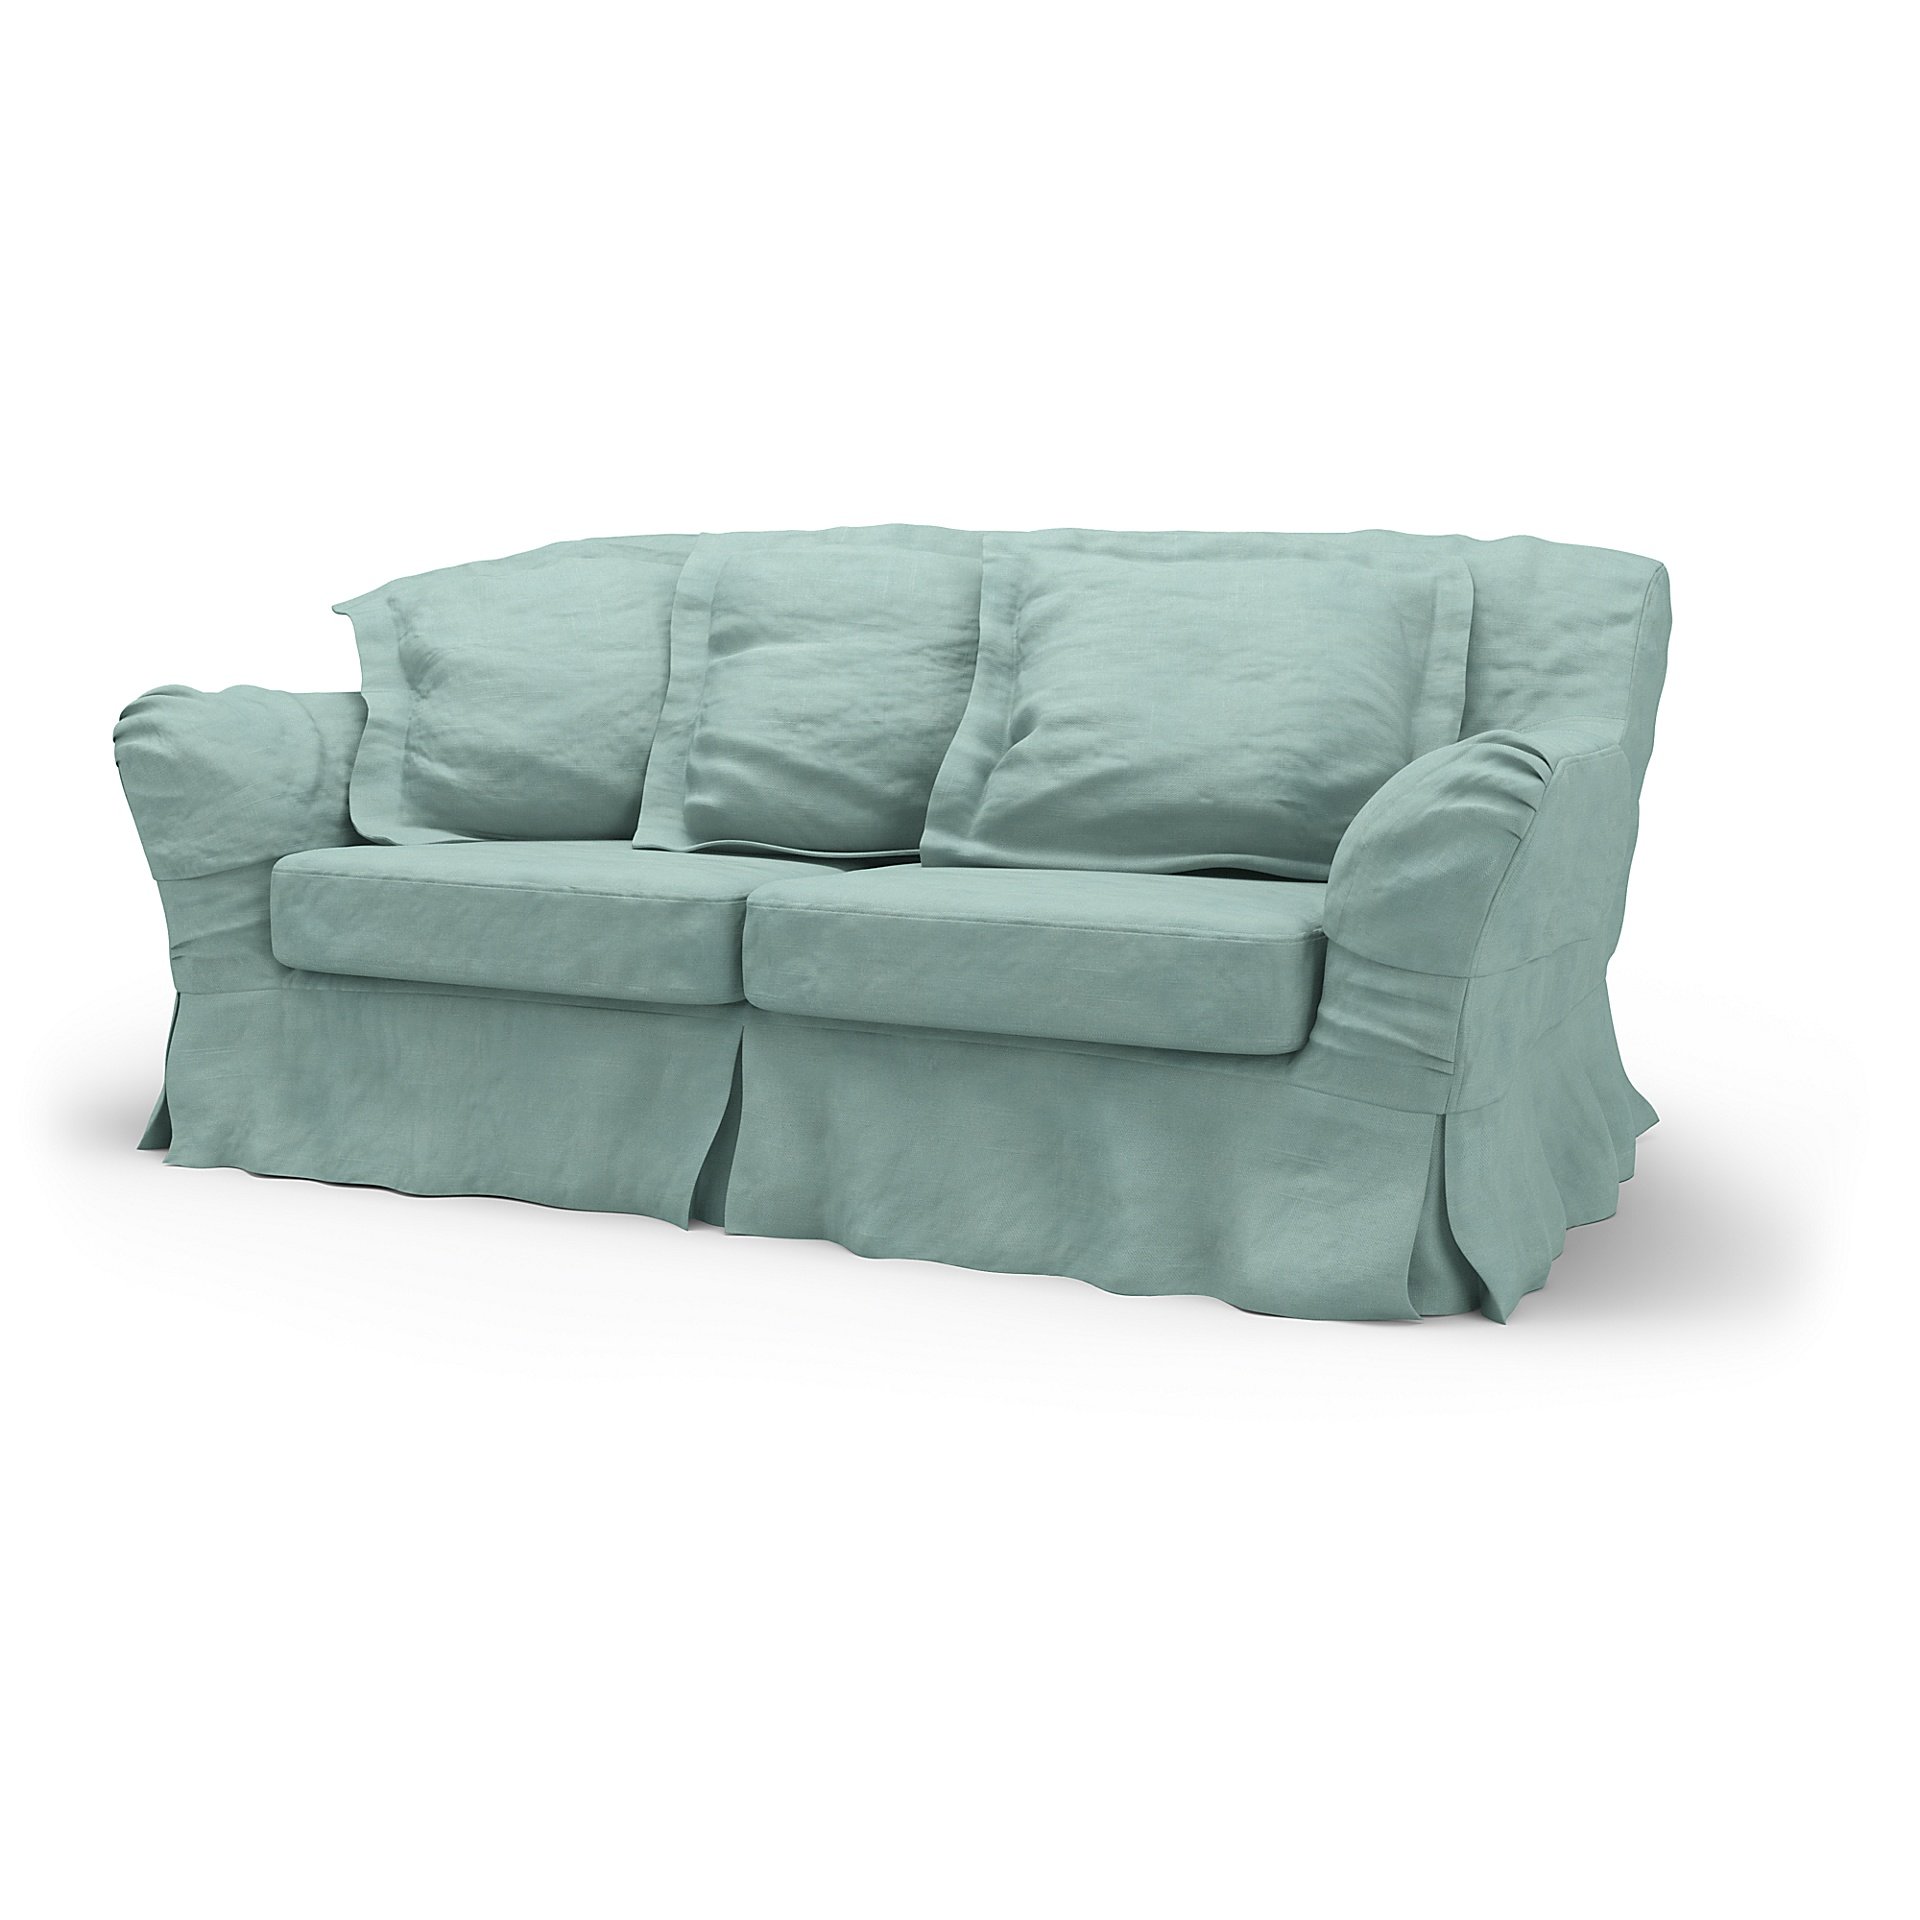 IKEA - Tomelilla 2 Seater Sofa Cover, Mineral Blue, Linen - Bemz